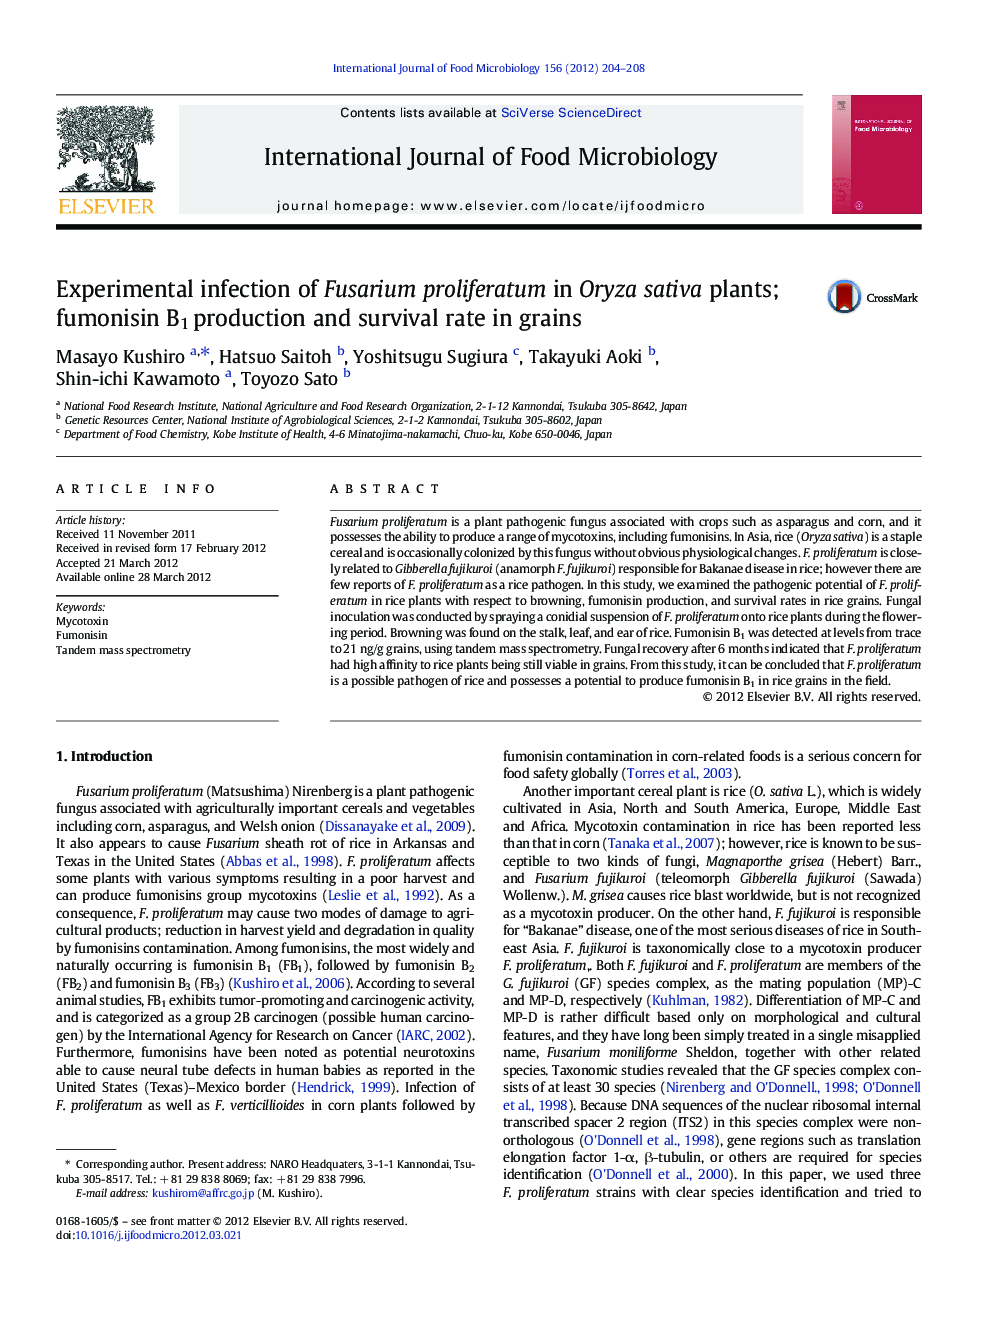 Experimental infection of Fusarium proliferatum in Oryza sativa plants; fumonisin B1 production and survival rate in grains